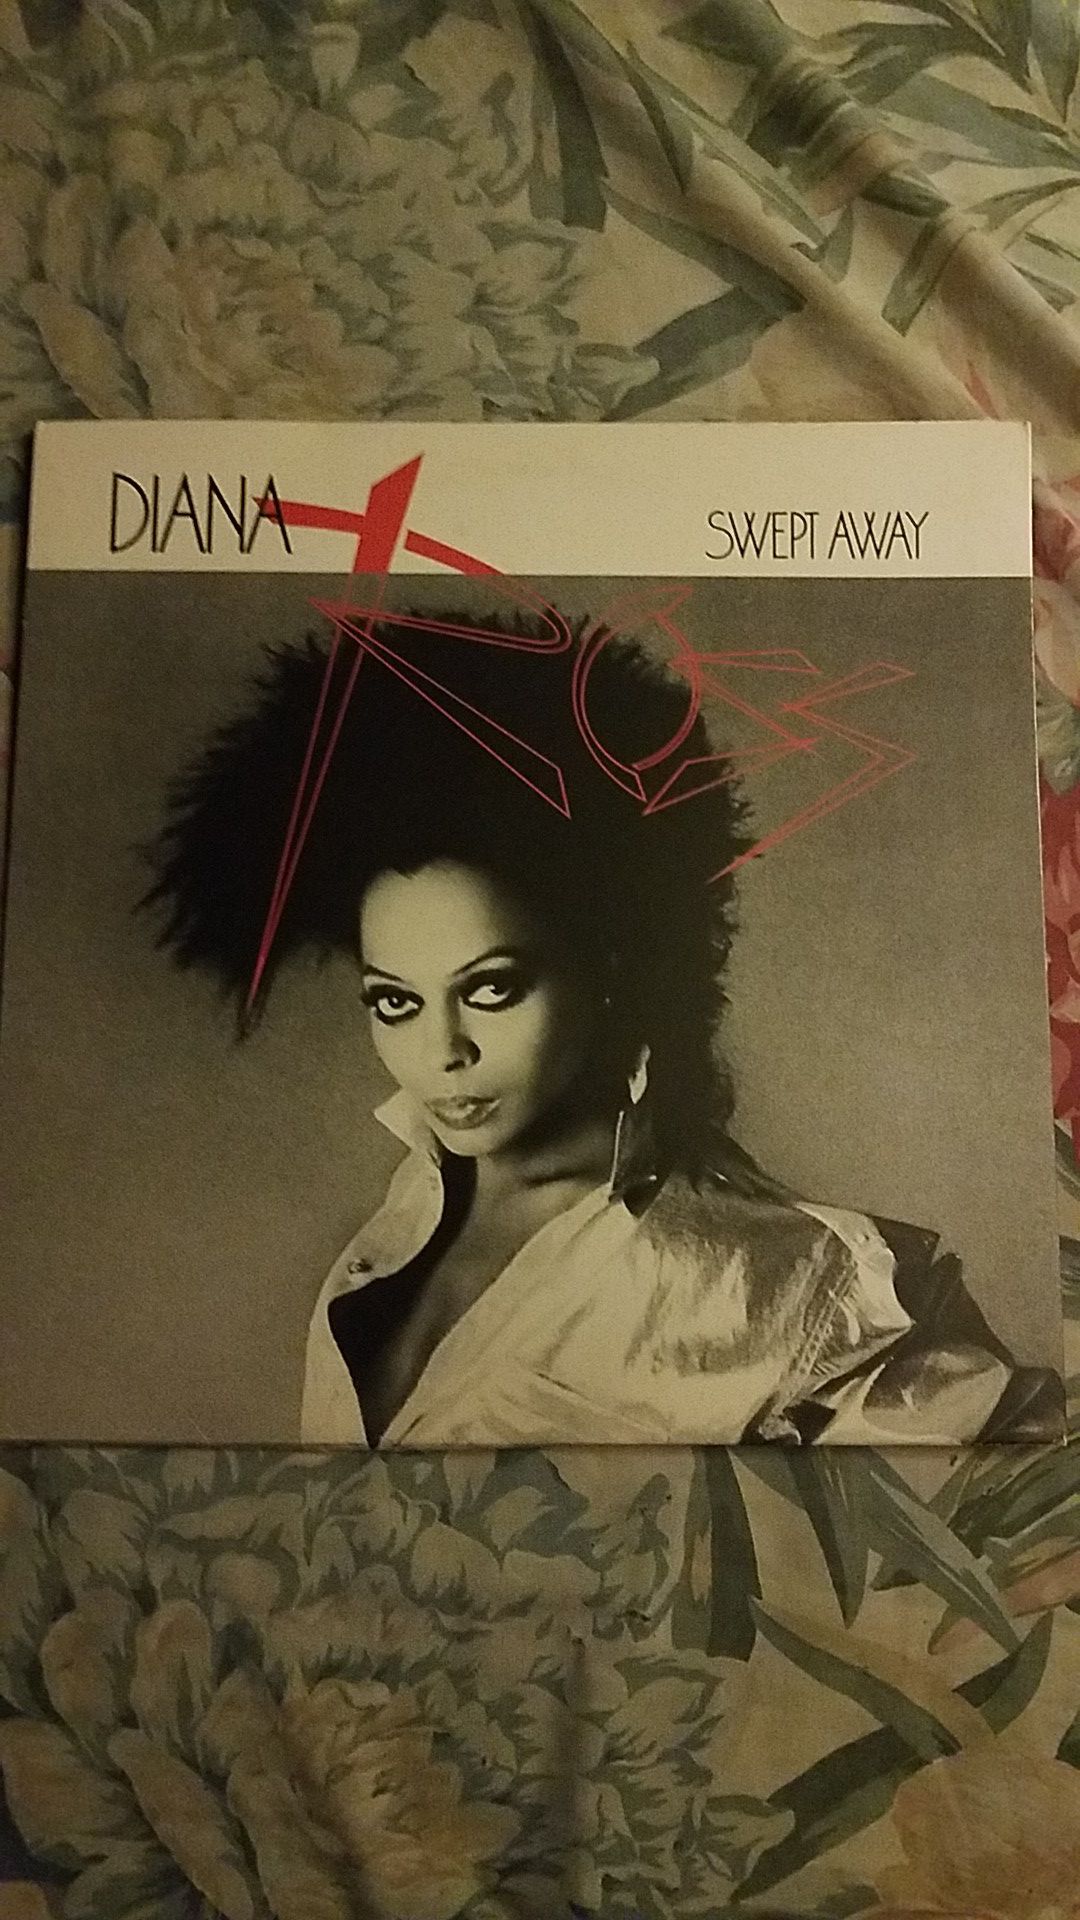 Diana Ross swept away 1984 vinyl record